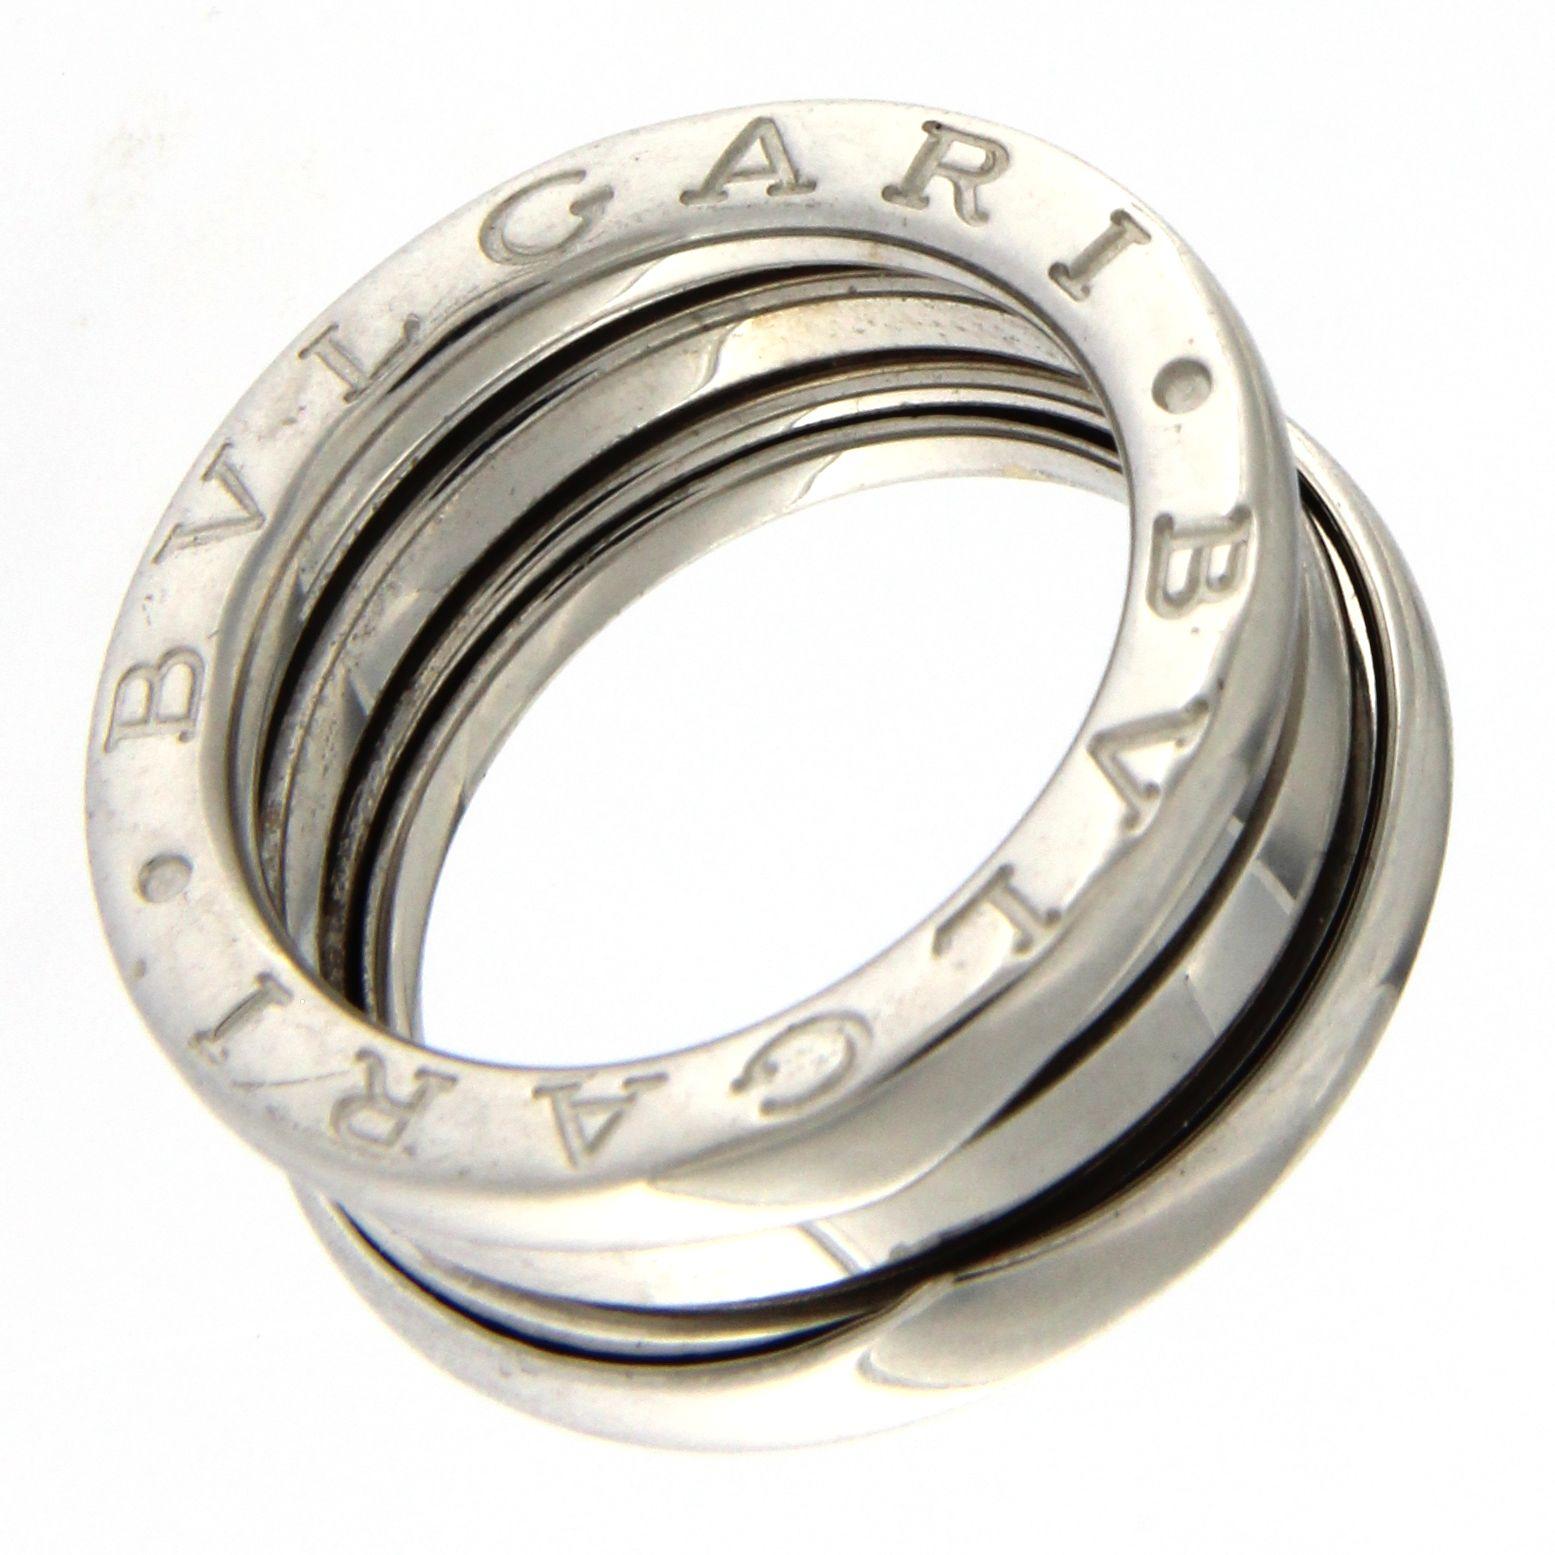 BZERO1 ring 18kt white gold       size 47       3 Band